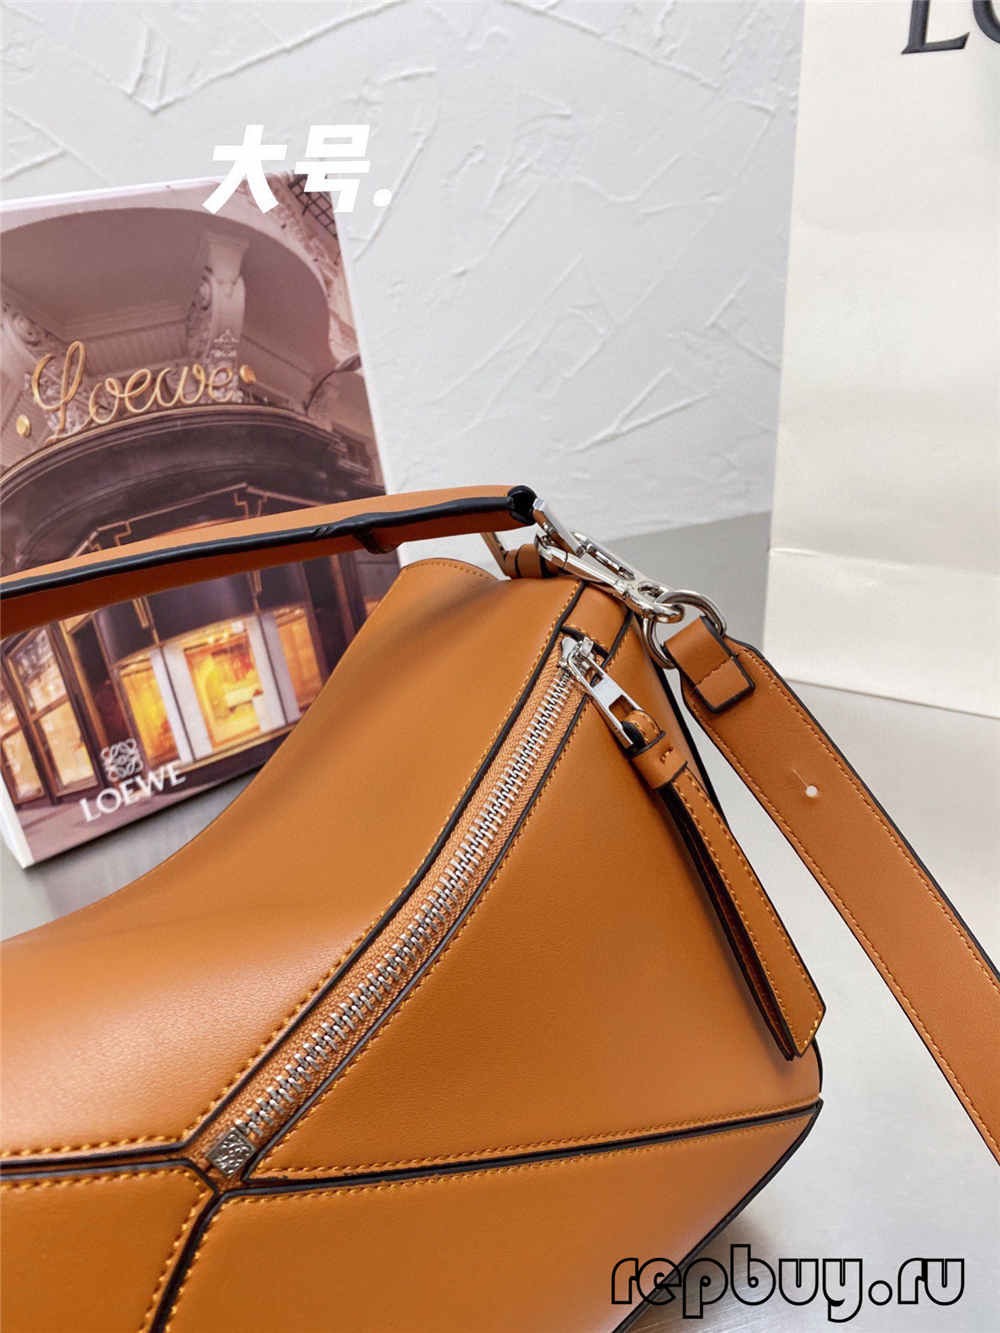 Loewe puzzle Replica sacculorum (2022 latest) -Best Quality Fake Louis Vuitton Bag Online Store, Replica designer bag ru